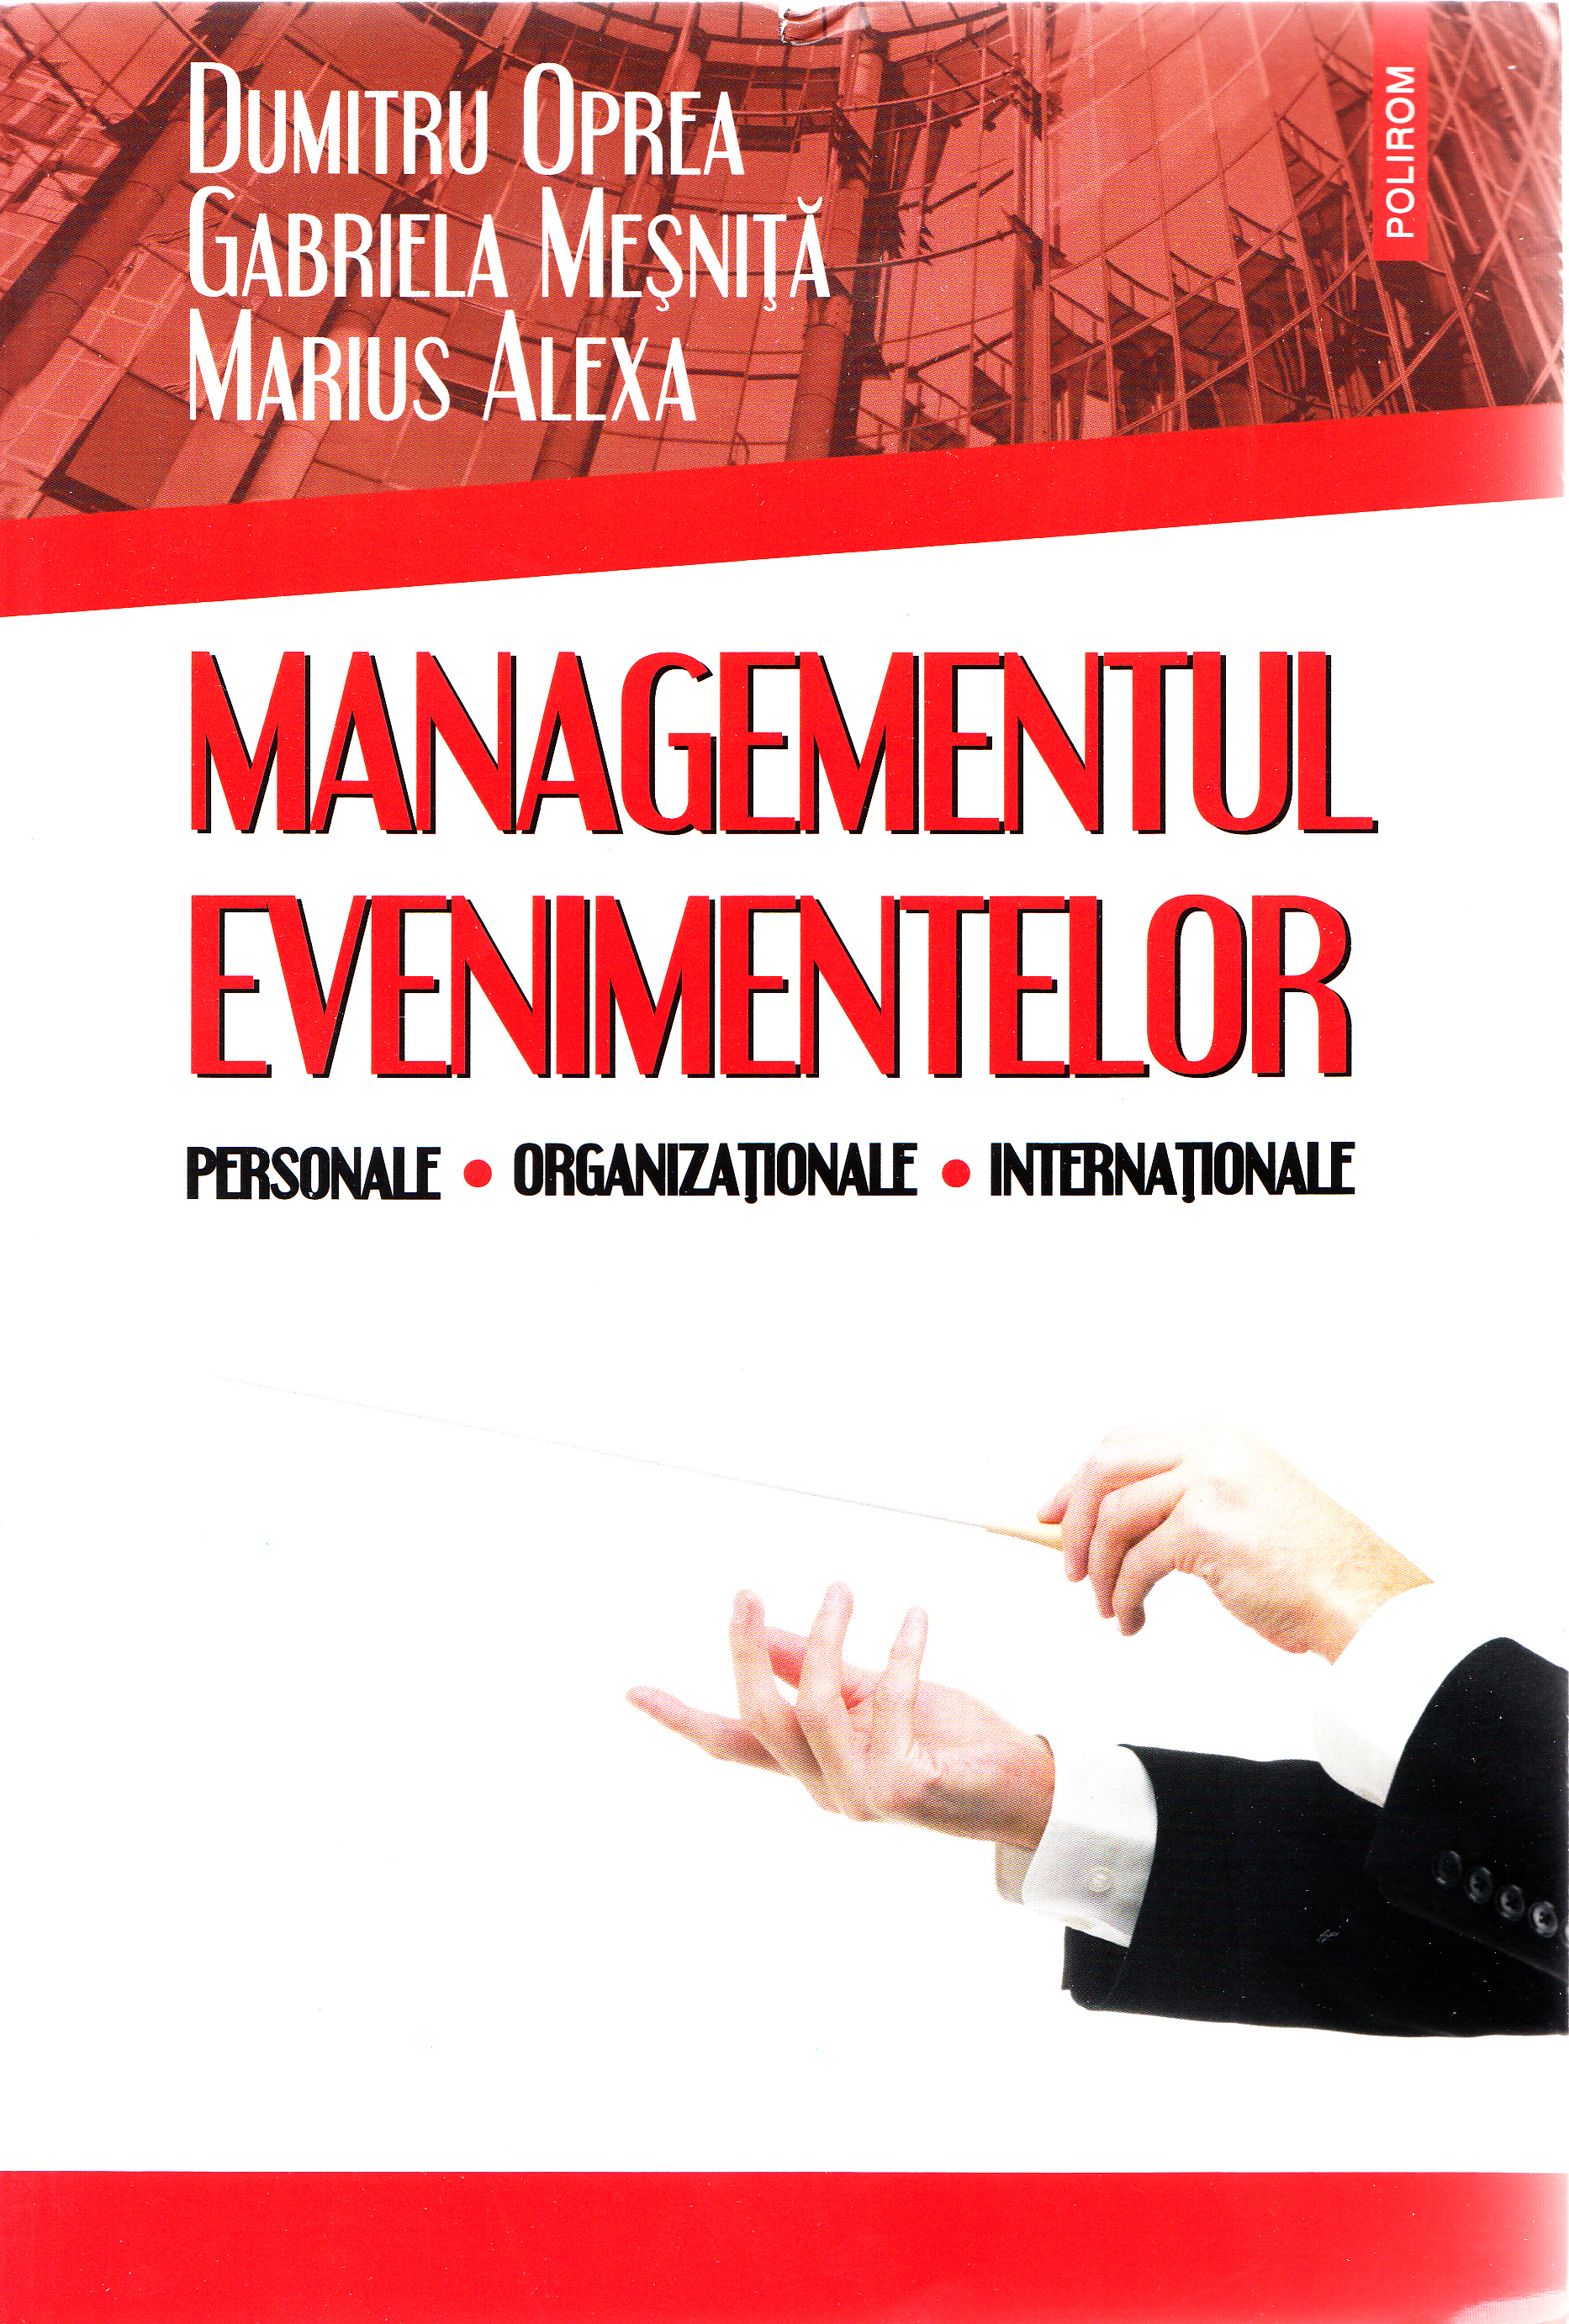 Managementul evenimentelor: personale, organizationale, internationale - Dumitru Oprea, Gabriela Mesnita, Marius Alexa